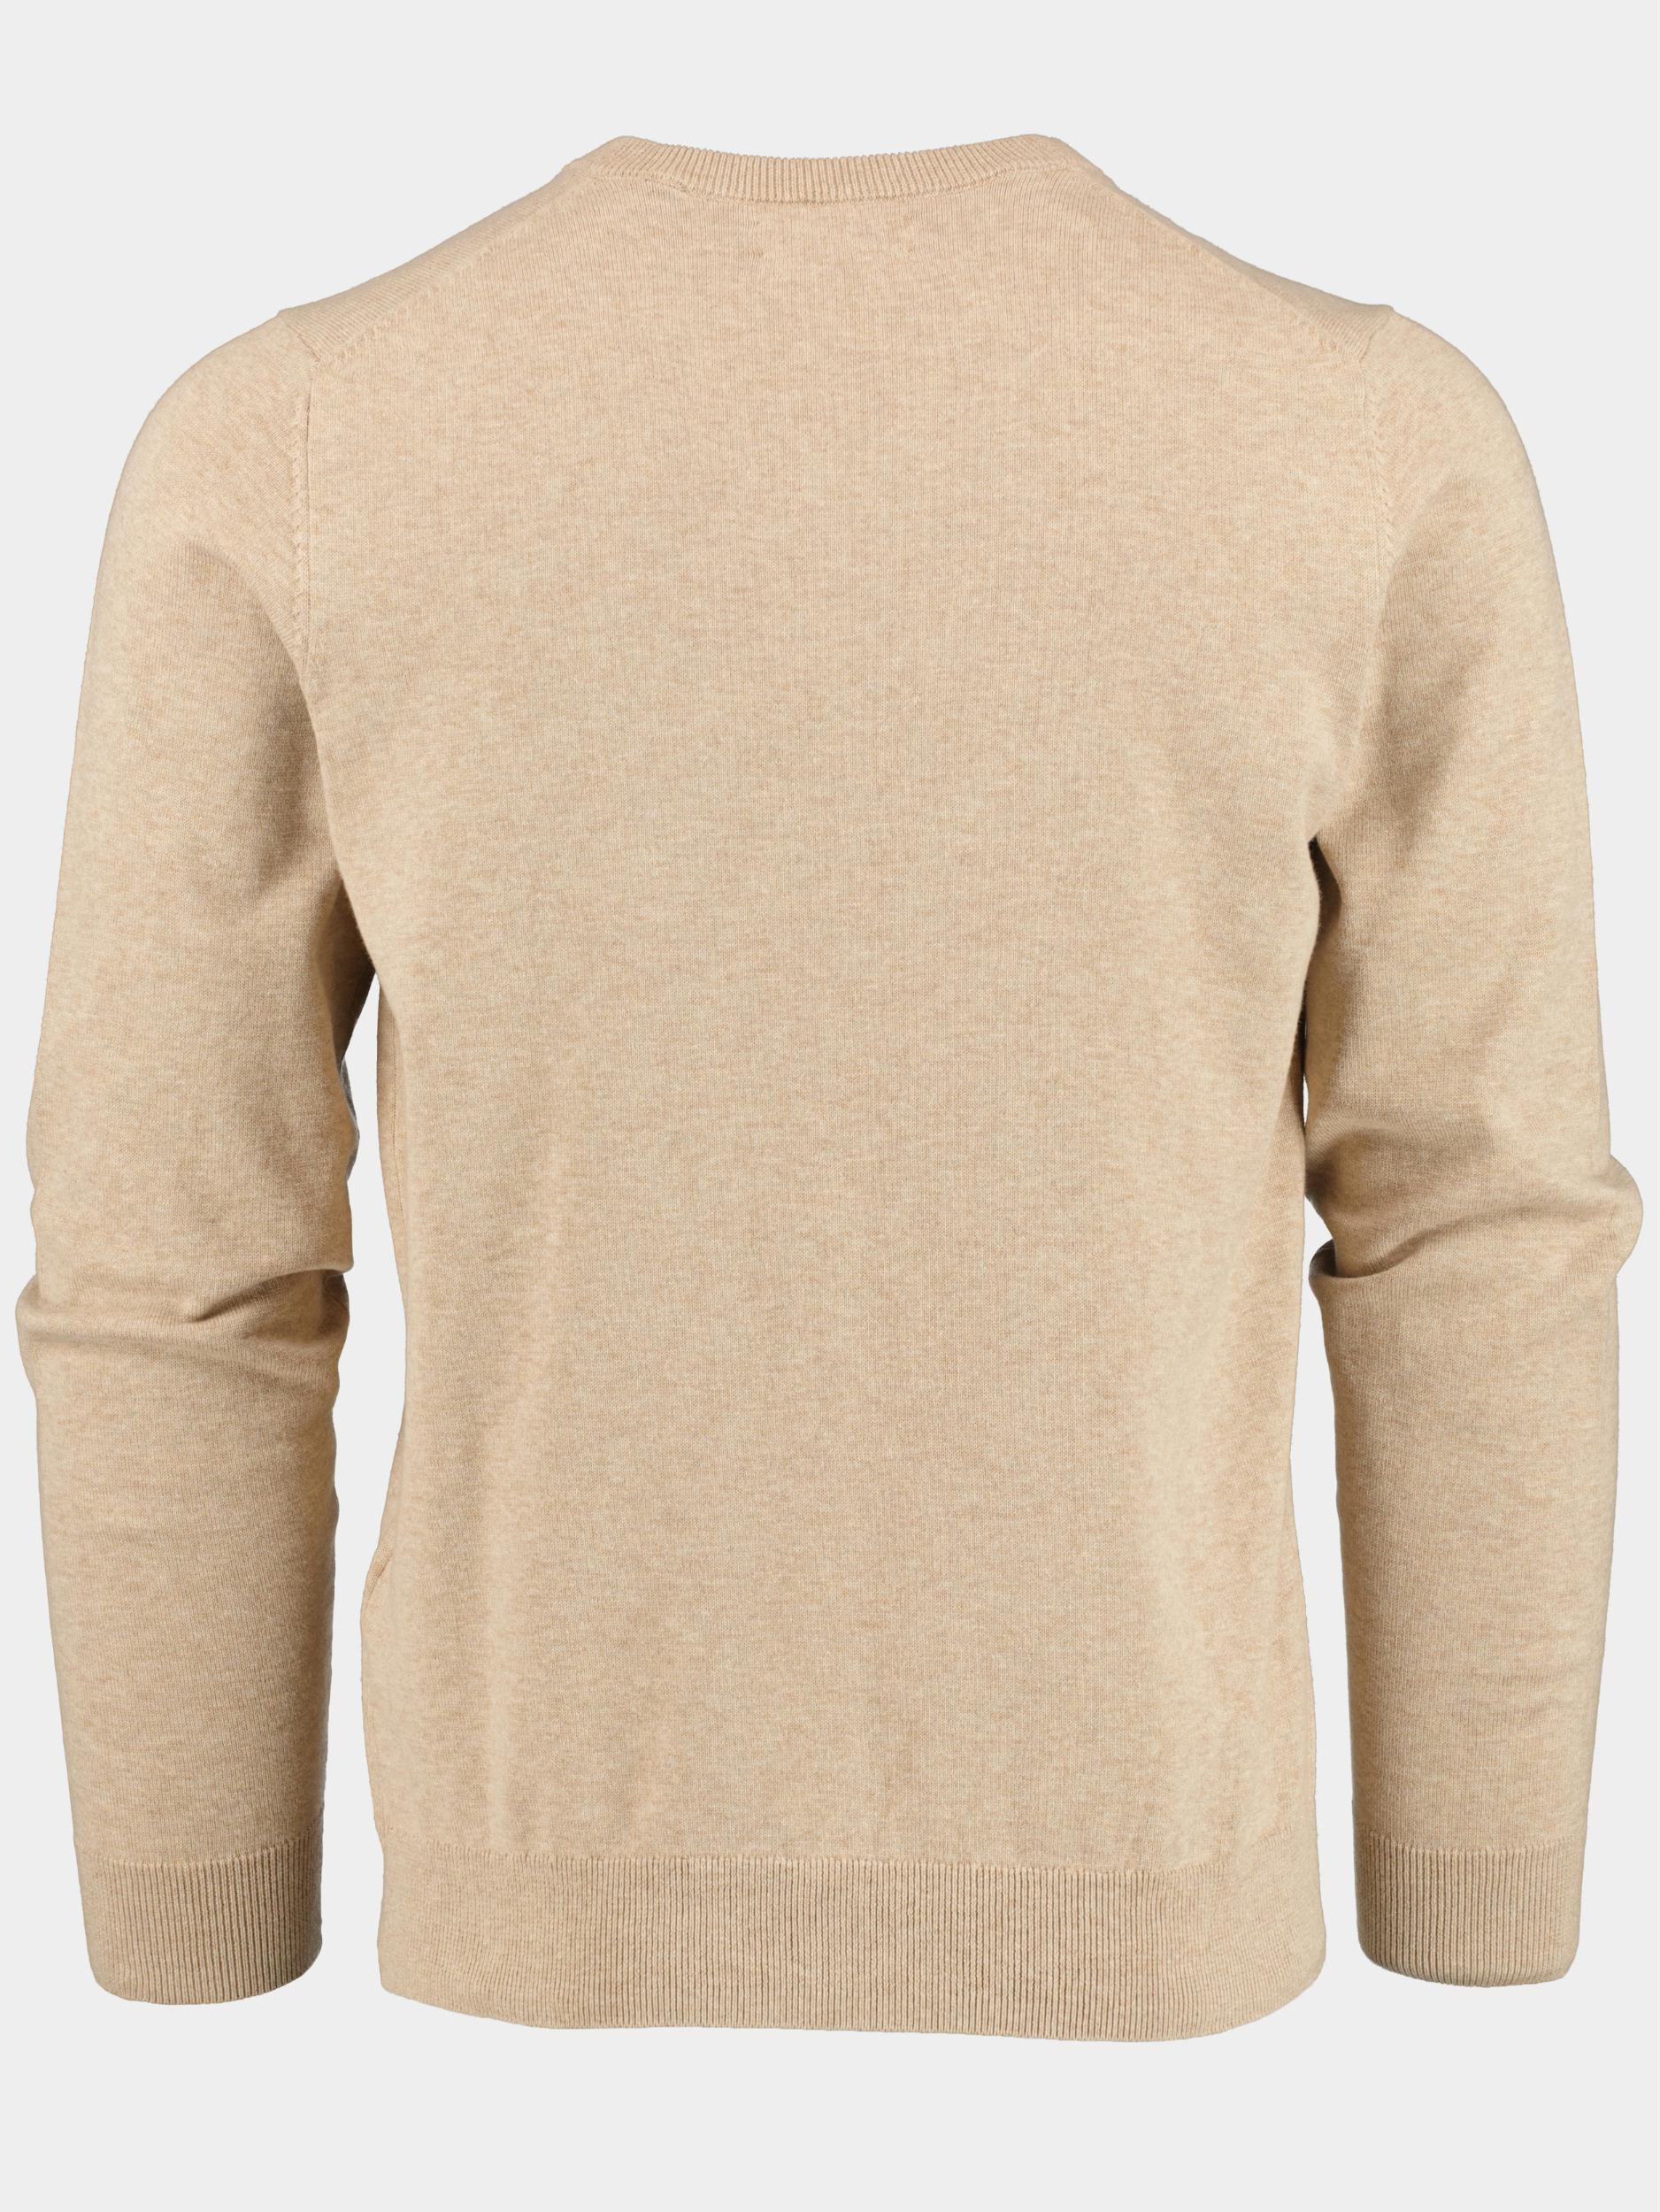 Gant Pullover Beige Classic Cotton V-Neck 8030552/287